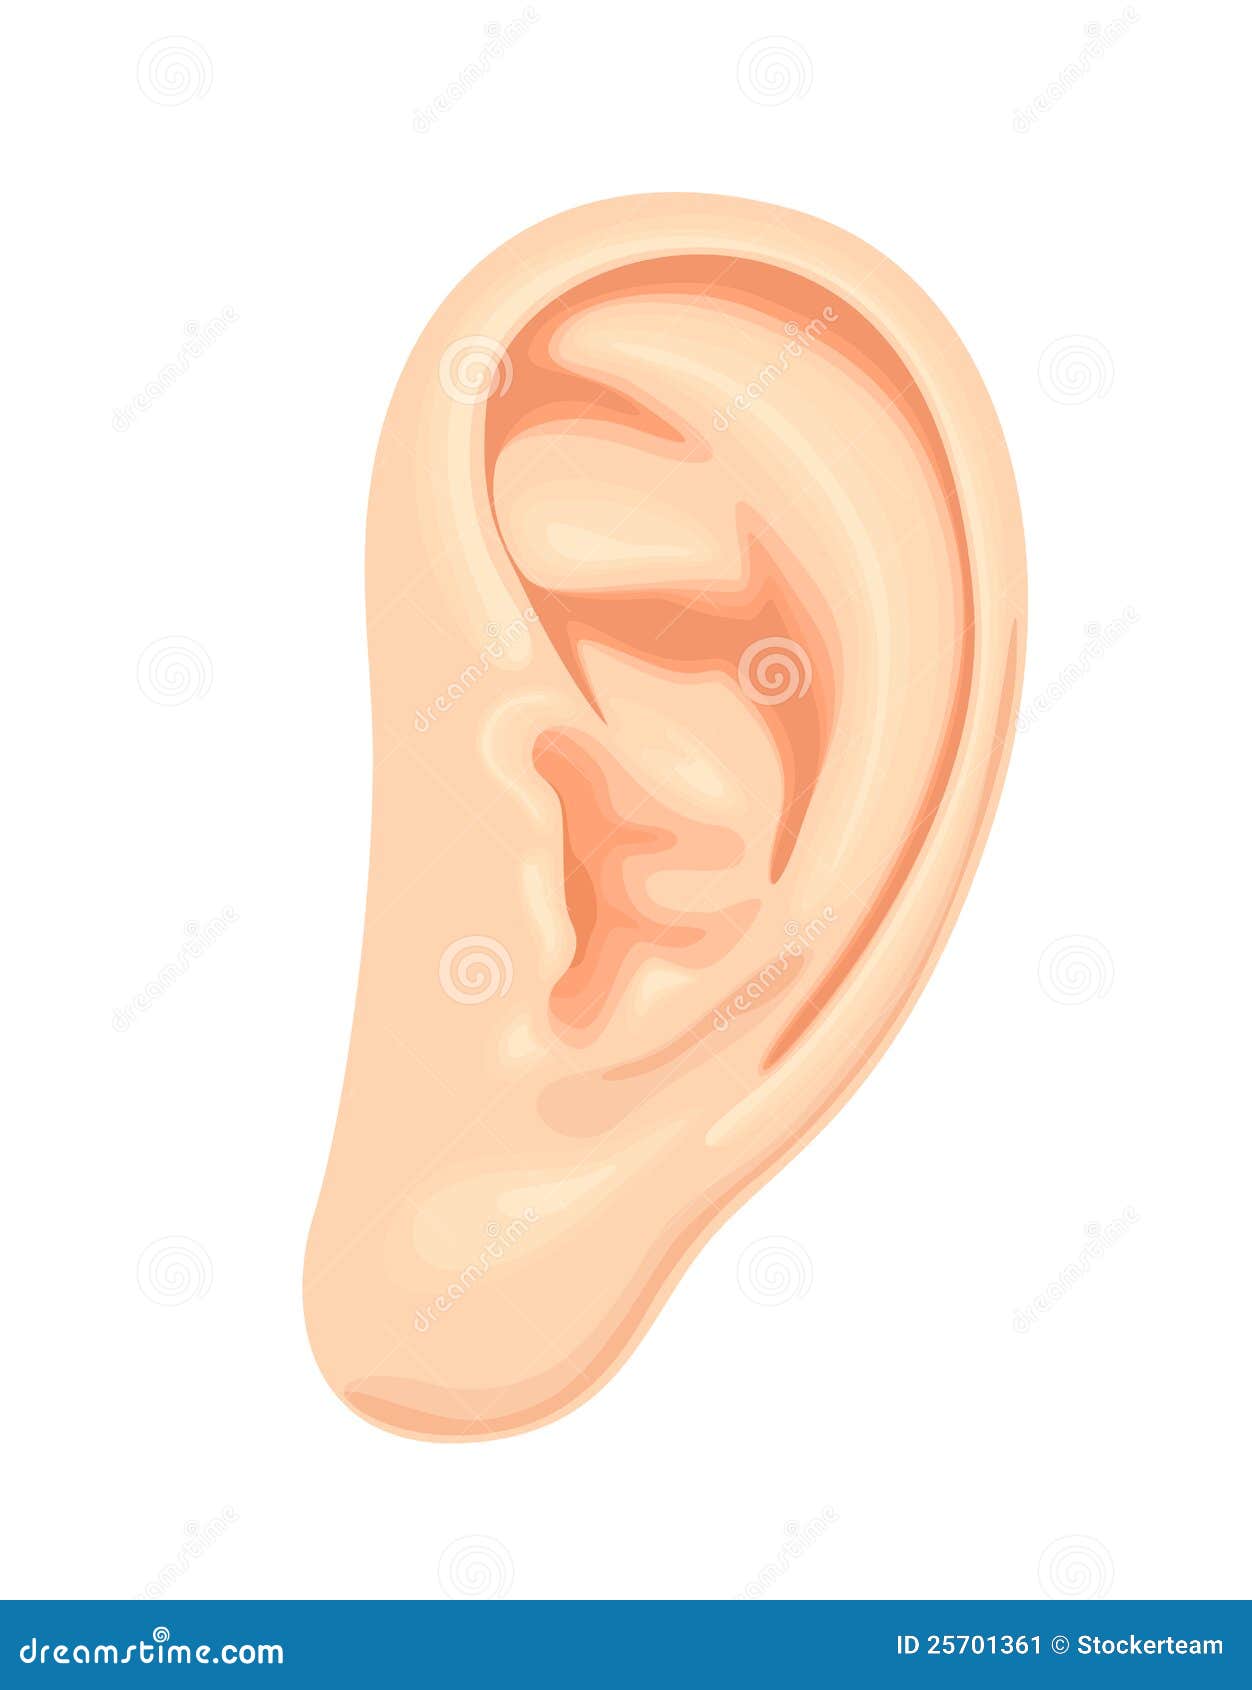 human ear clip art free - photo #41